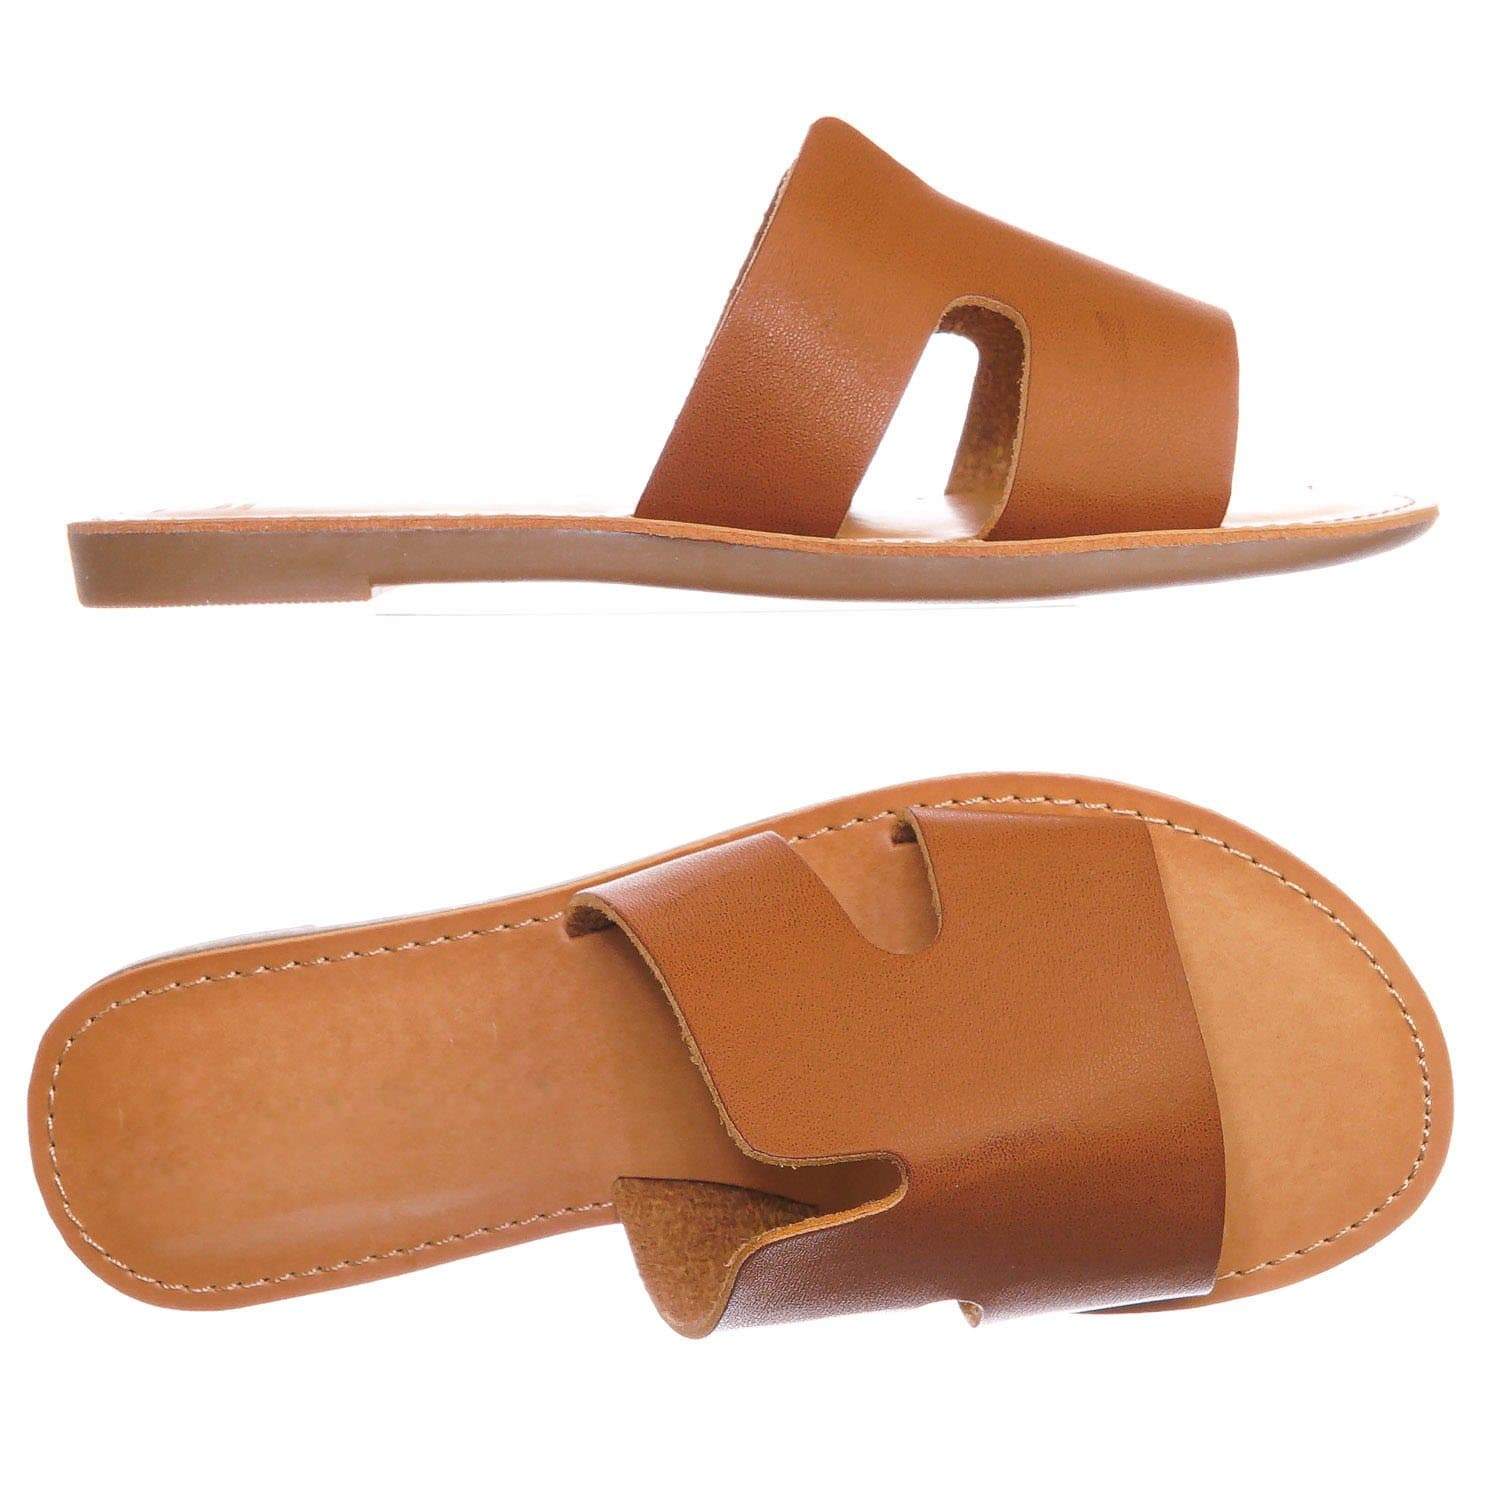 Tan Brown / Salvia2 Tan Girls Slip On Flat Slipper Sandal - Kids Children Horsehoe Open Toe Shoe